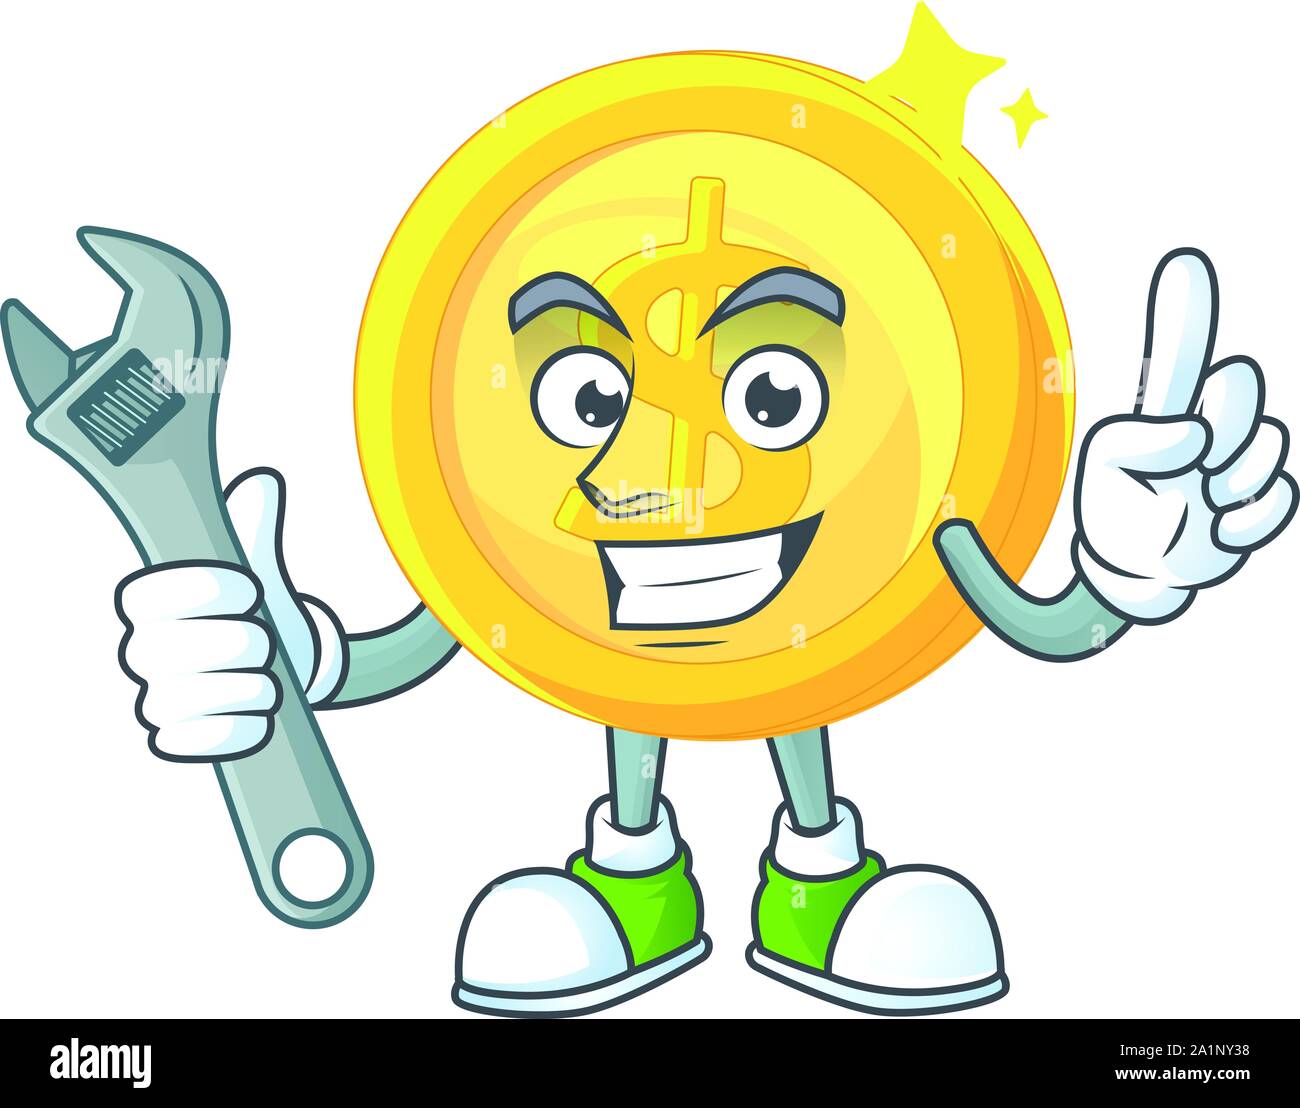 Mechanic gold coin cartoon character mascot style Stock Vector